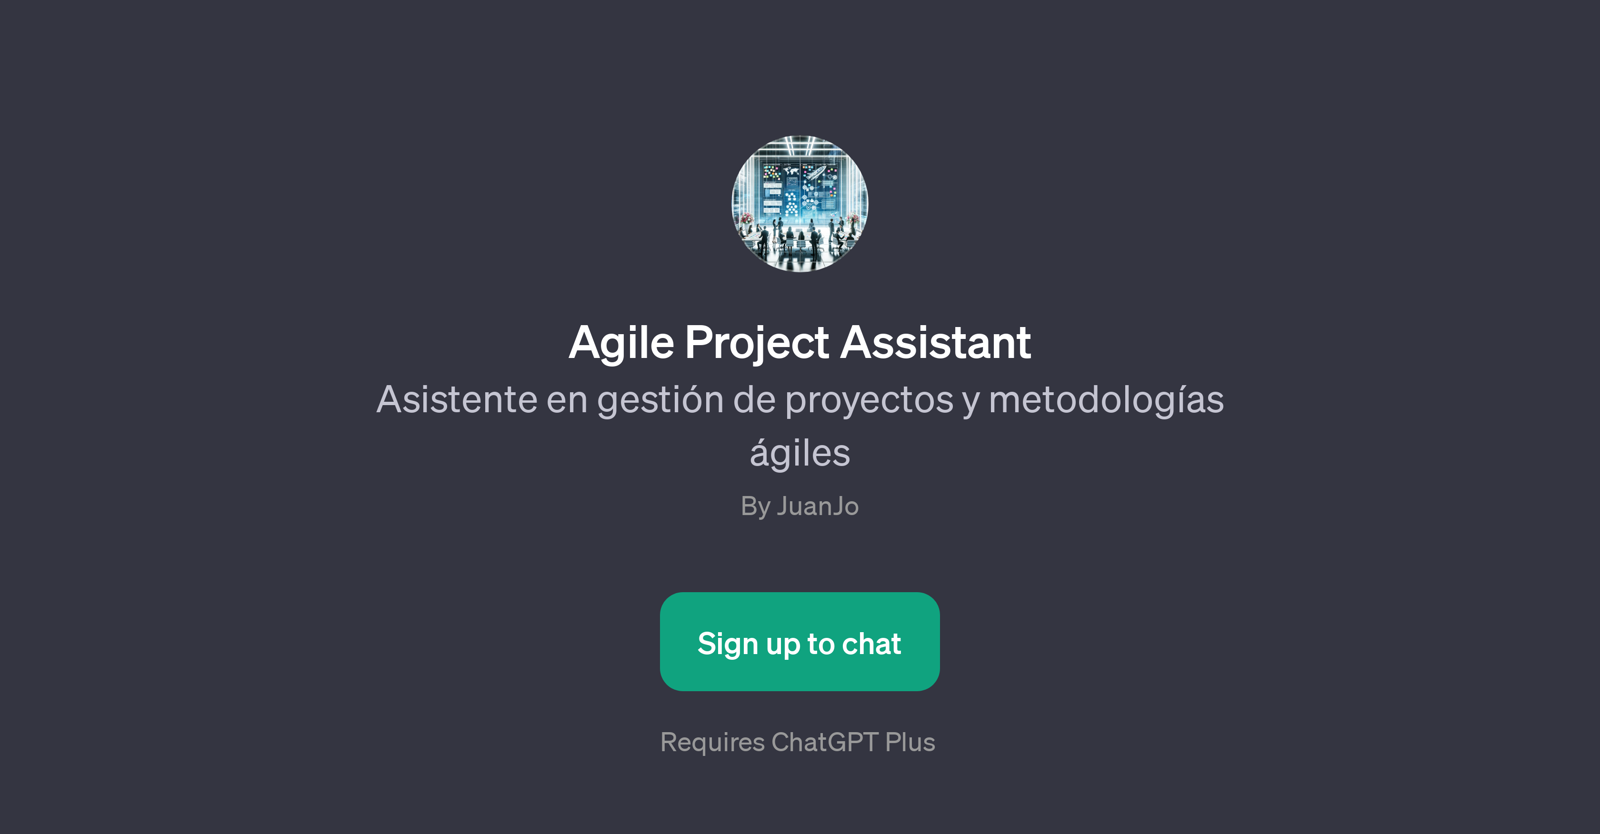 Agile Project Assistant website